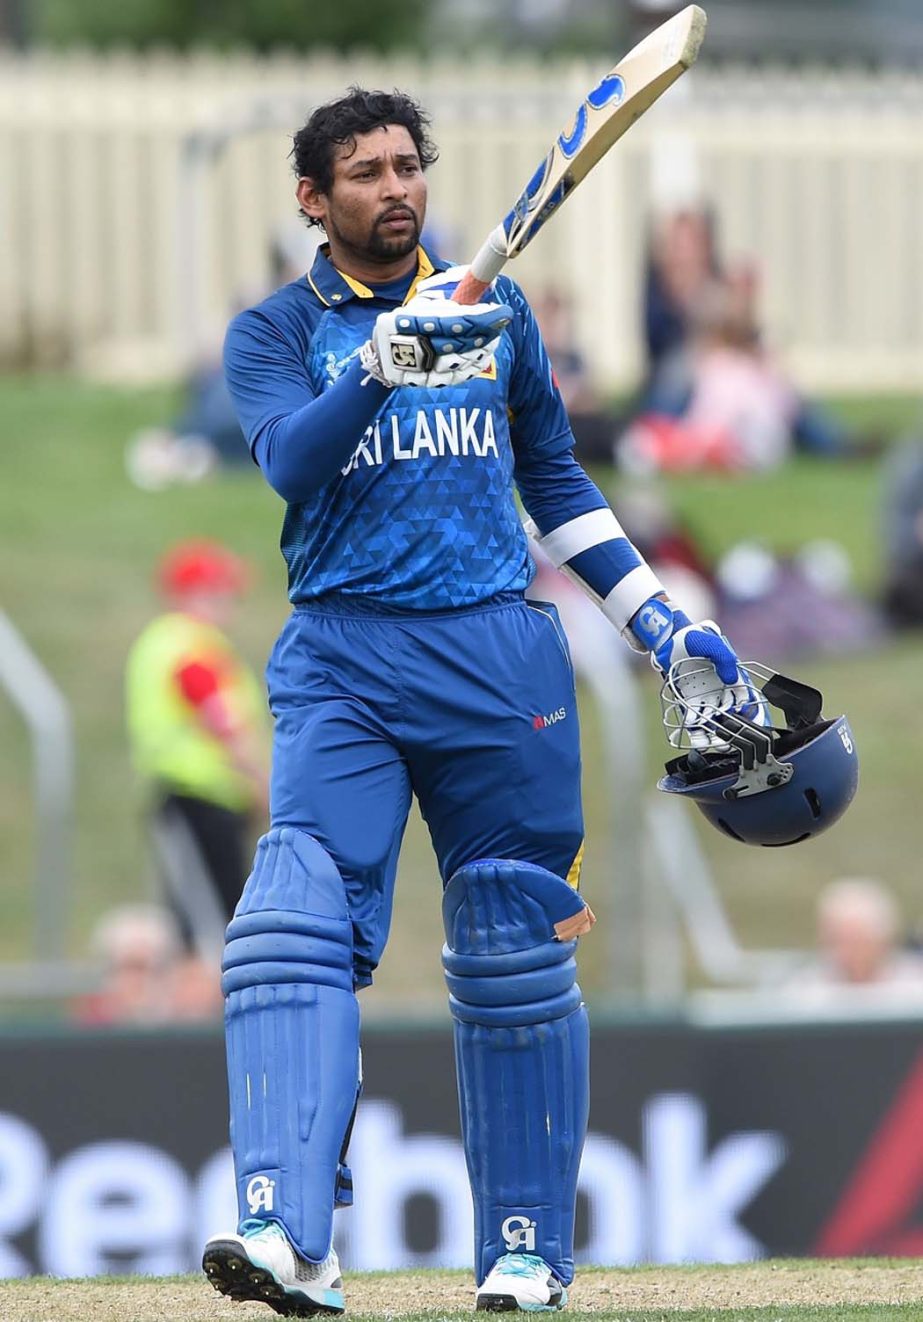 Sri Lanka batsman Tillakaratne Dilshan raises his bat after scoring a century during the 2015 Cricket World Cup Pool A match between Scotland and Sri Lanka in Hobart on Wednesday.